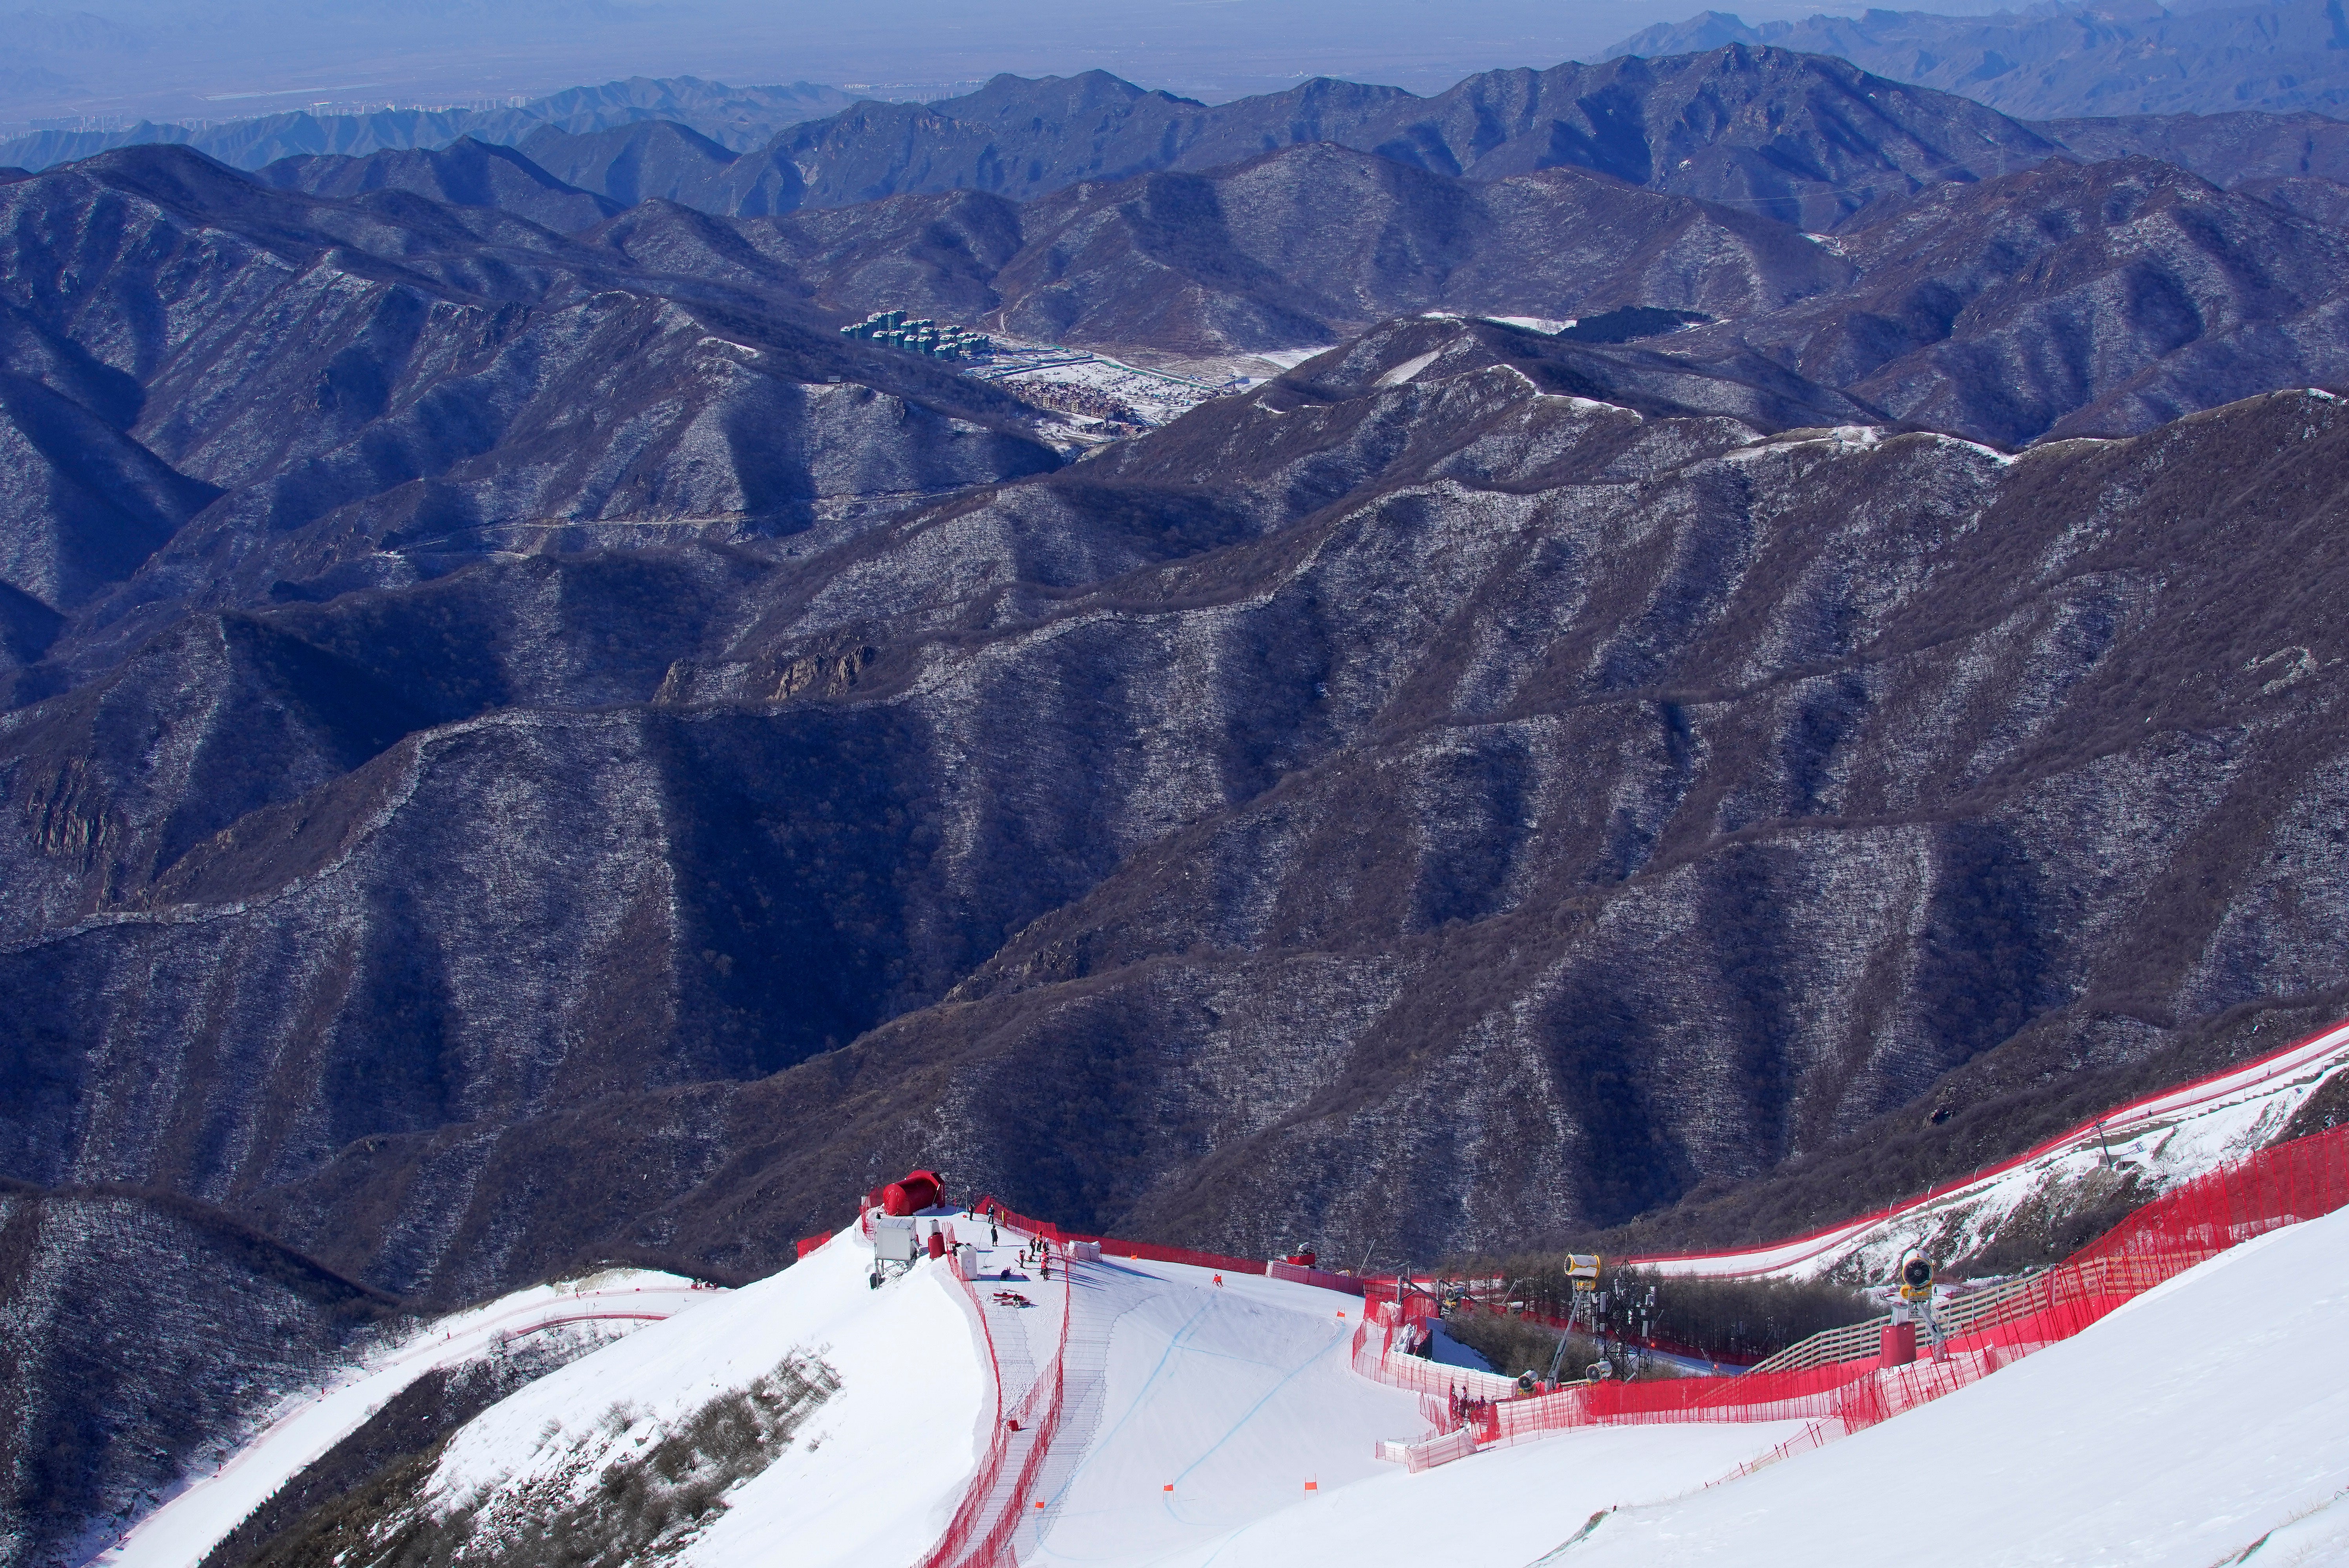 APTOPIX Beijing Olympics Alpine Skiing